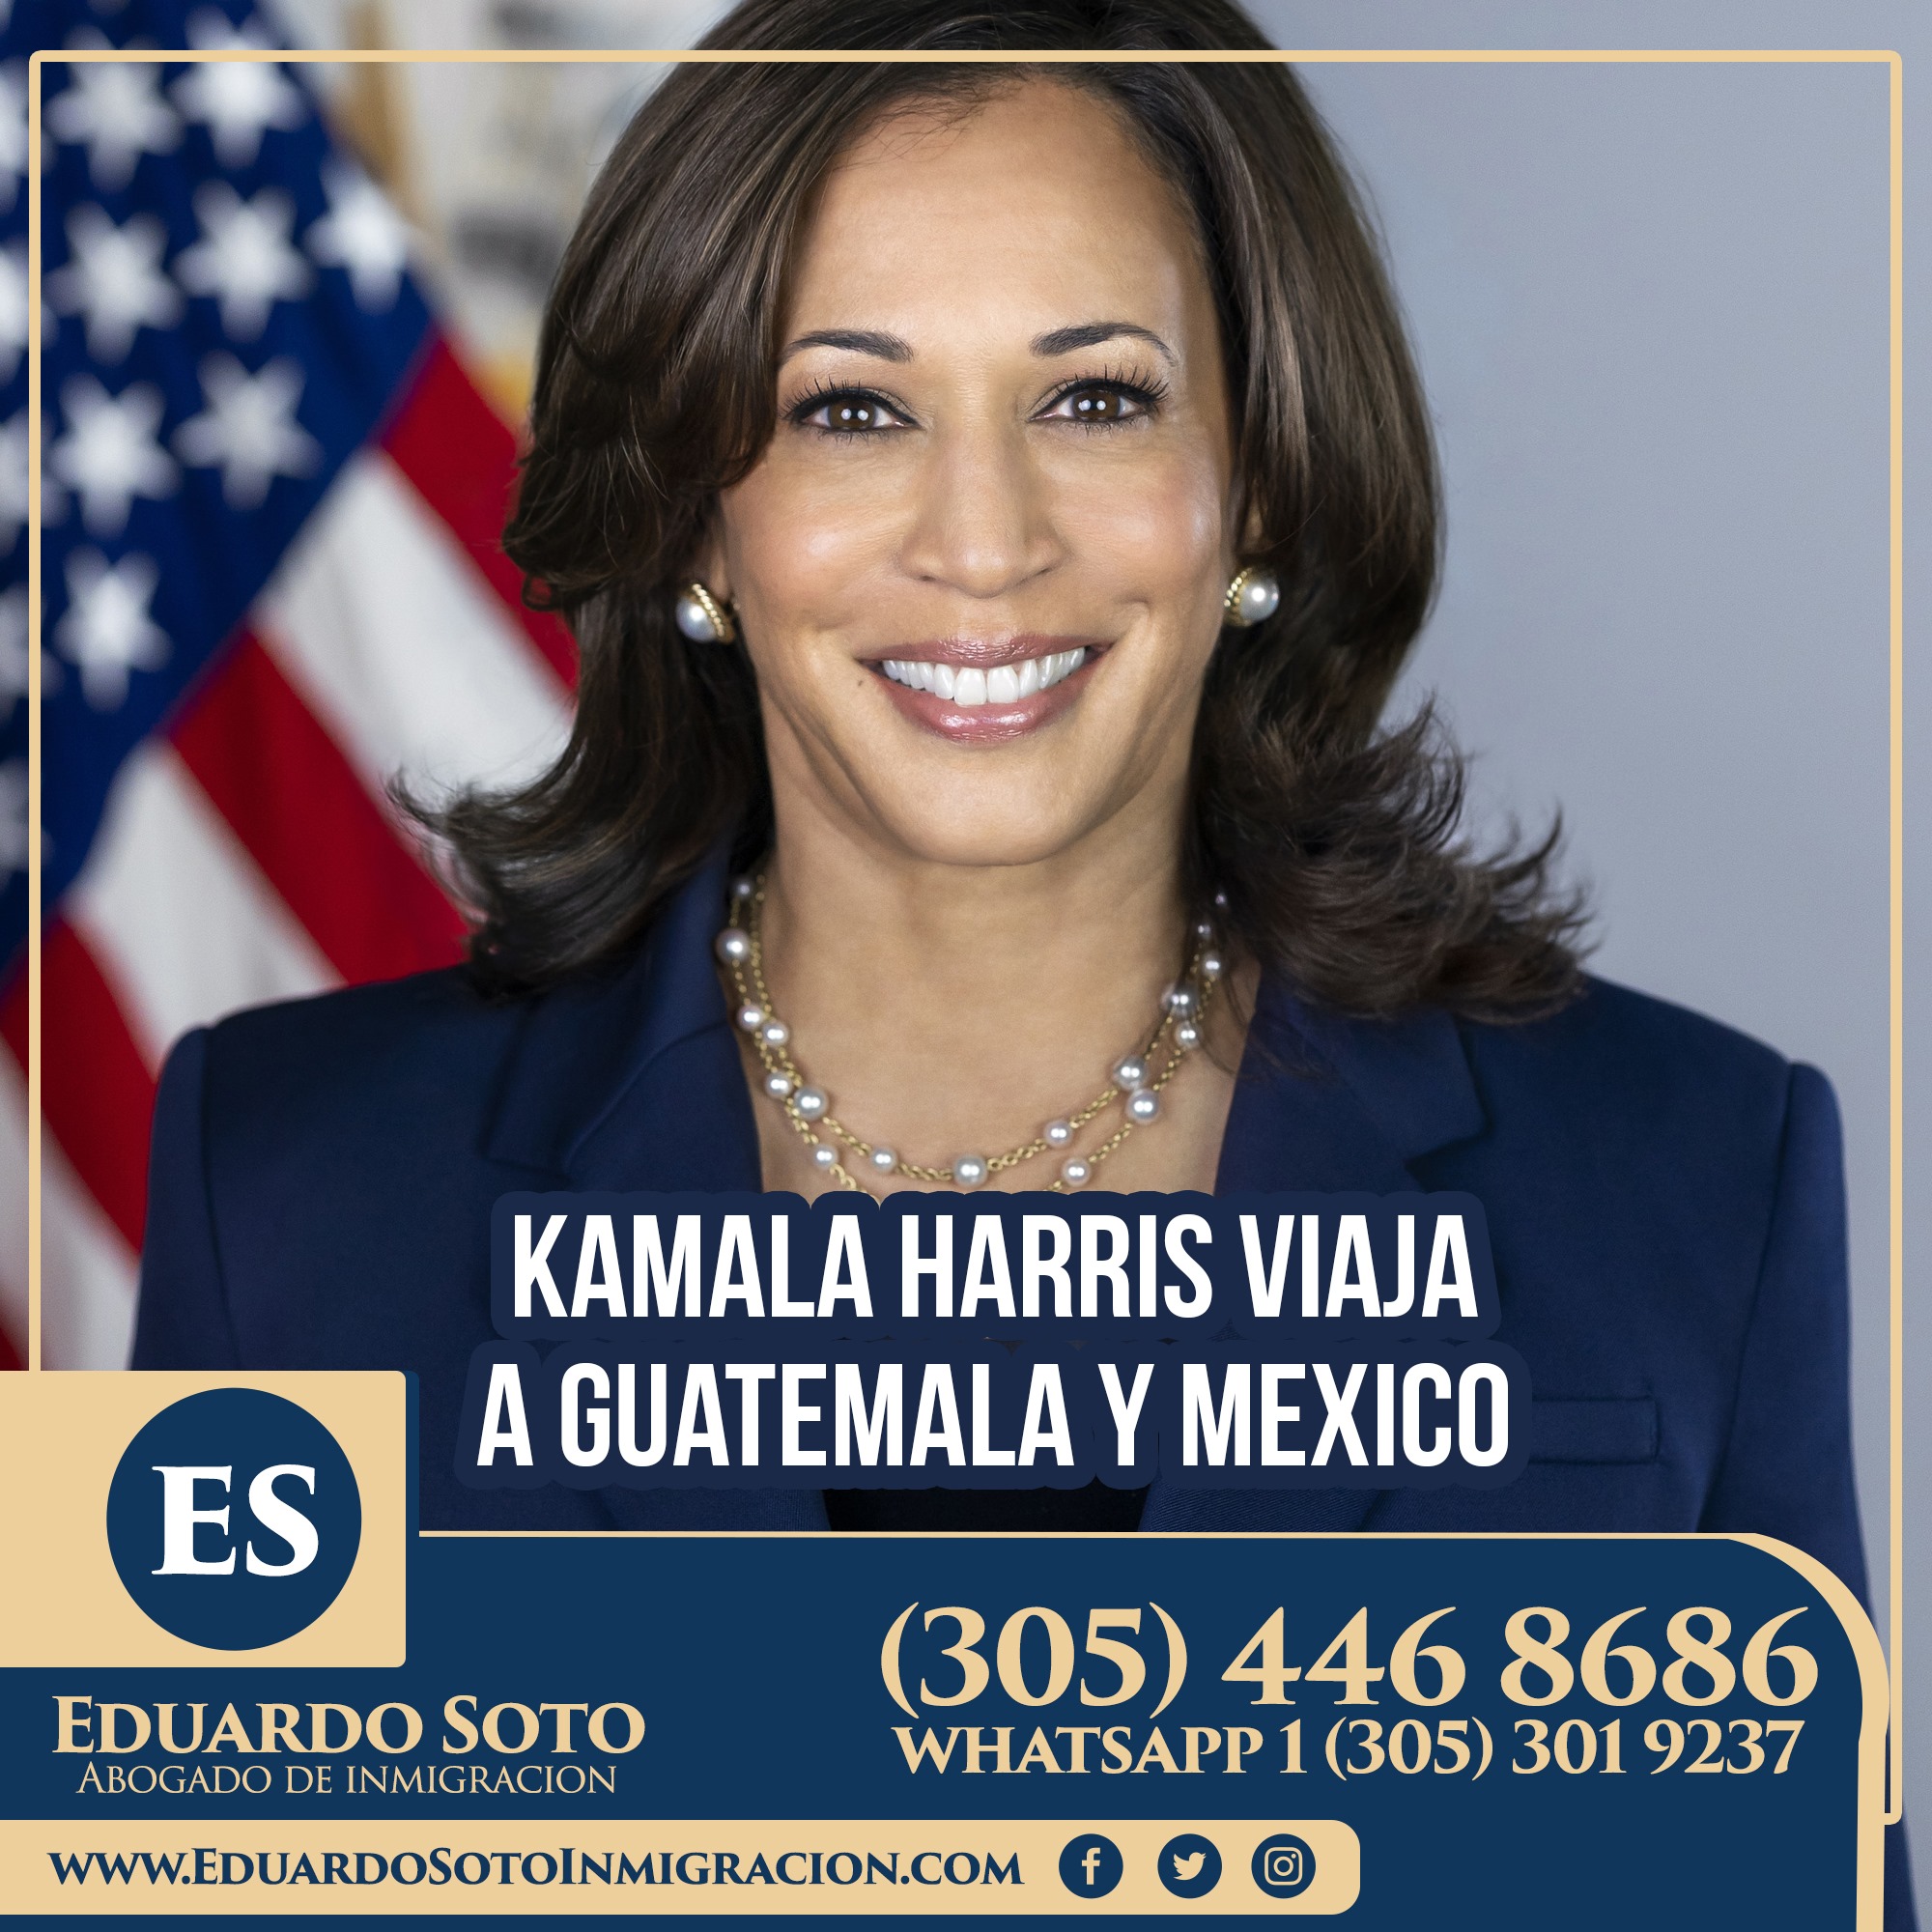 Kamala Harris Viaja a Guatemala y Mexico